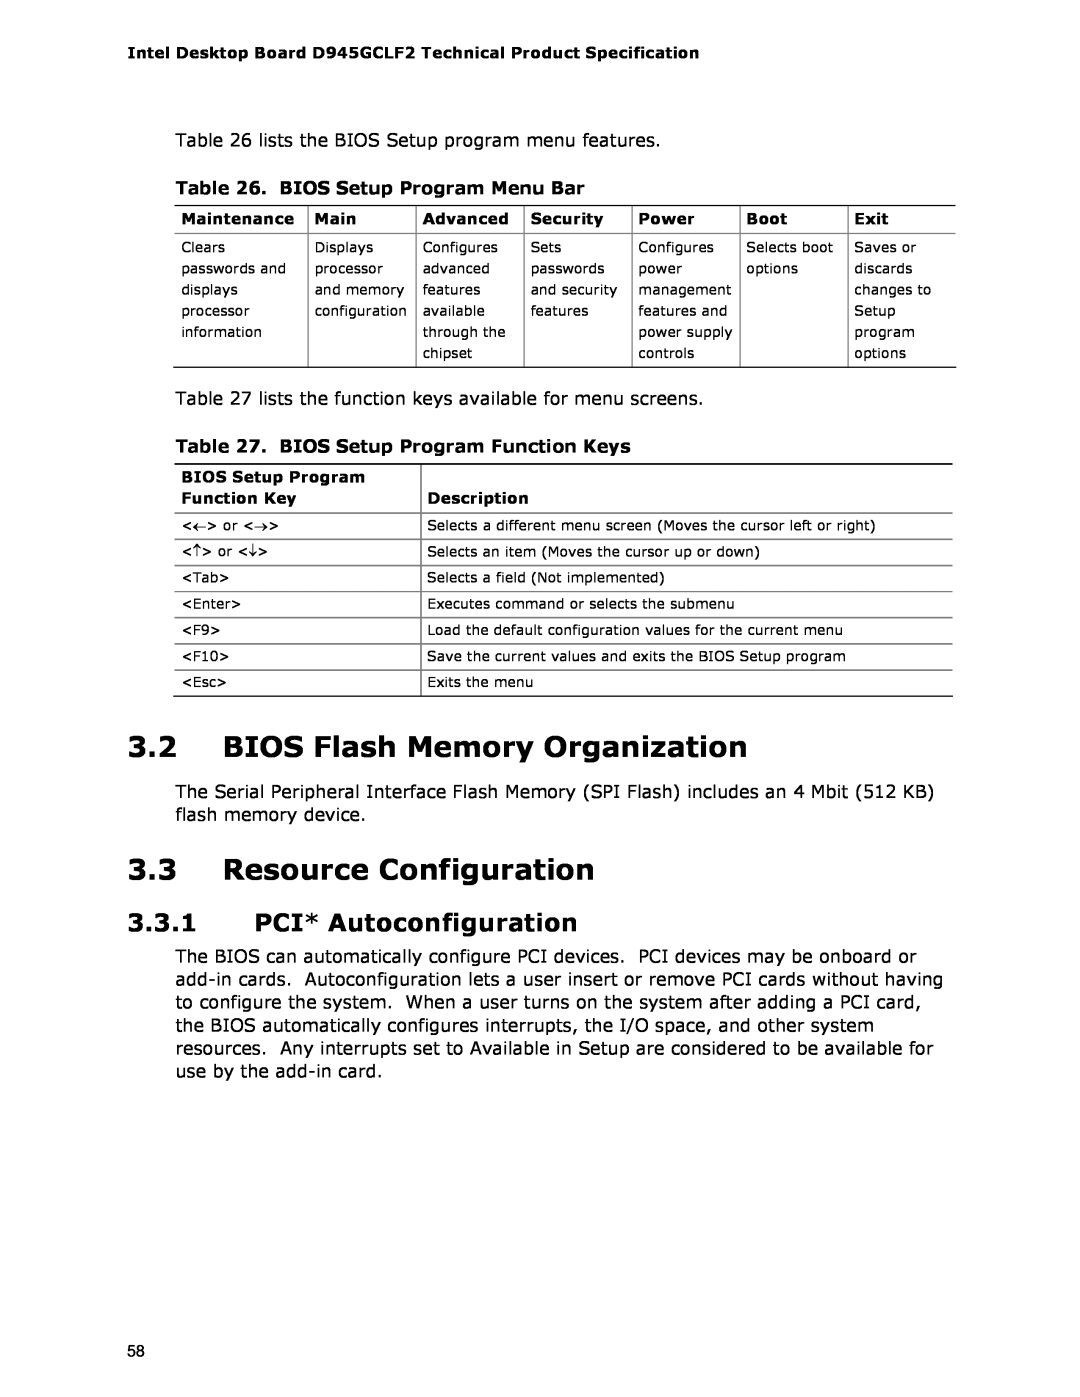 Intel D945GCLF2 specifications BIOS Flash Memory Organization, Resource Configuration, 3.3.1 PCI* Autoconfiguration 